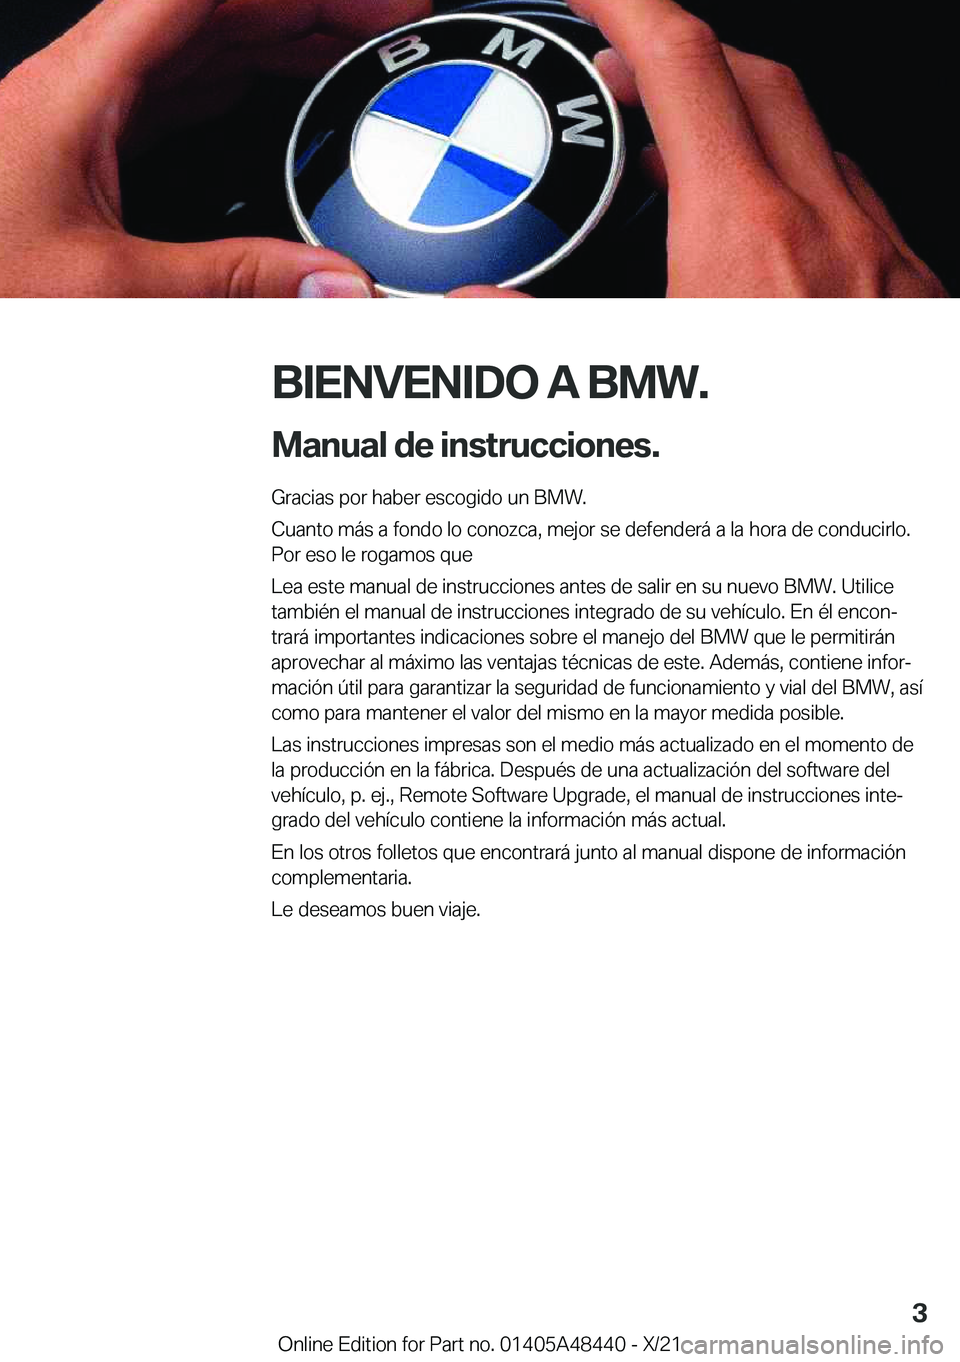 BMW X7 2022  Manuales de Empleo (in Spanish) �B�I�E�N�V�E�N�I�D�O��A��B�M�W�.
�M�a�n�u�a�l��d�e��i�n�s�t�r�u�c�c�i�o�n�e�s�. �G�r�a�c�i�a�s��p�o�r��h�a�b�e�r��e�s�c�o�g�i�d�o��u�n��B�M�W�.
�C�u�a�n�t�o��m�